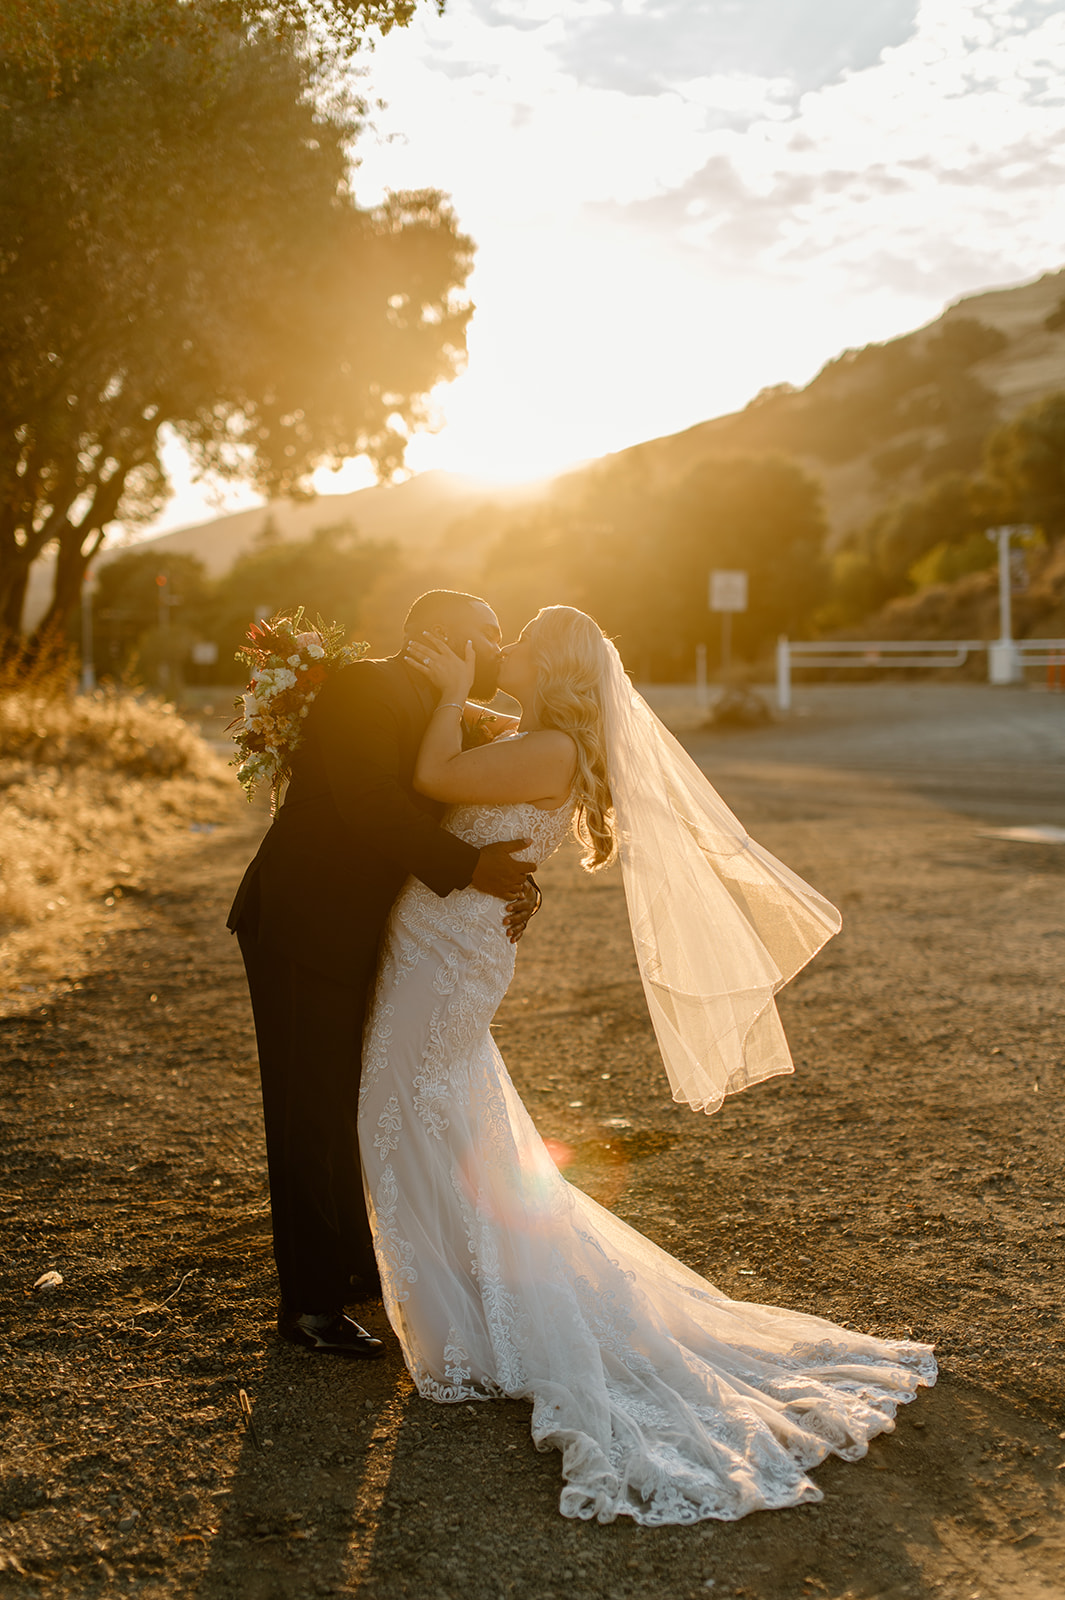 Sydney Jai Photography - Sunol valley wedding photography, northern california photographer, bride and groom photos, golden hour wedding photos